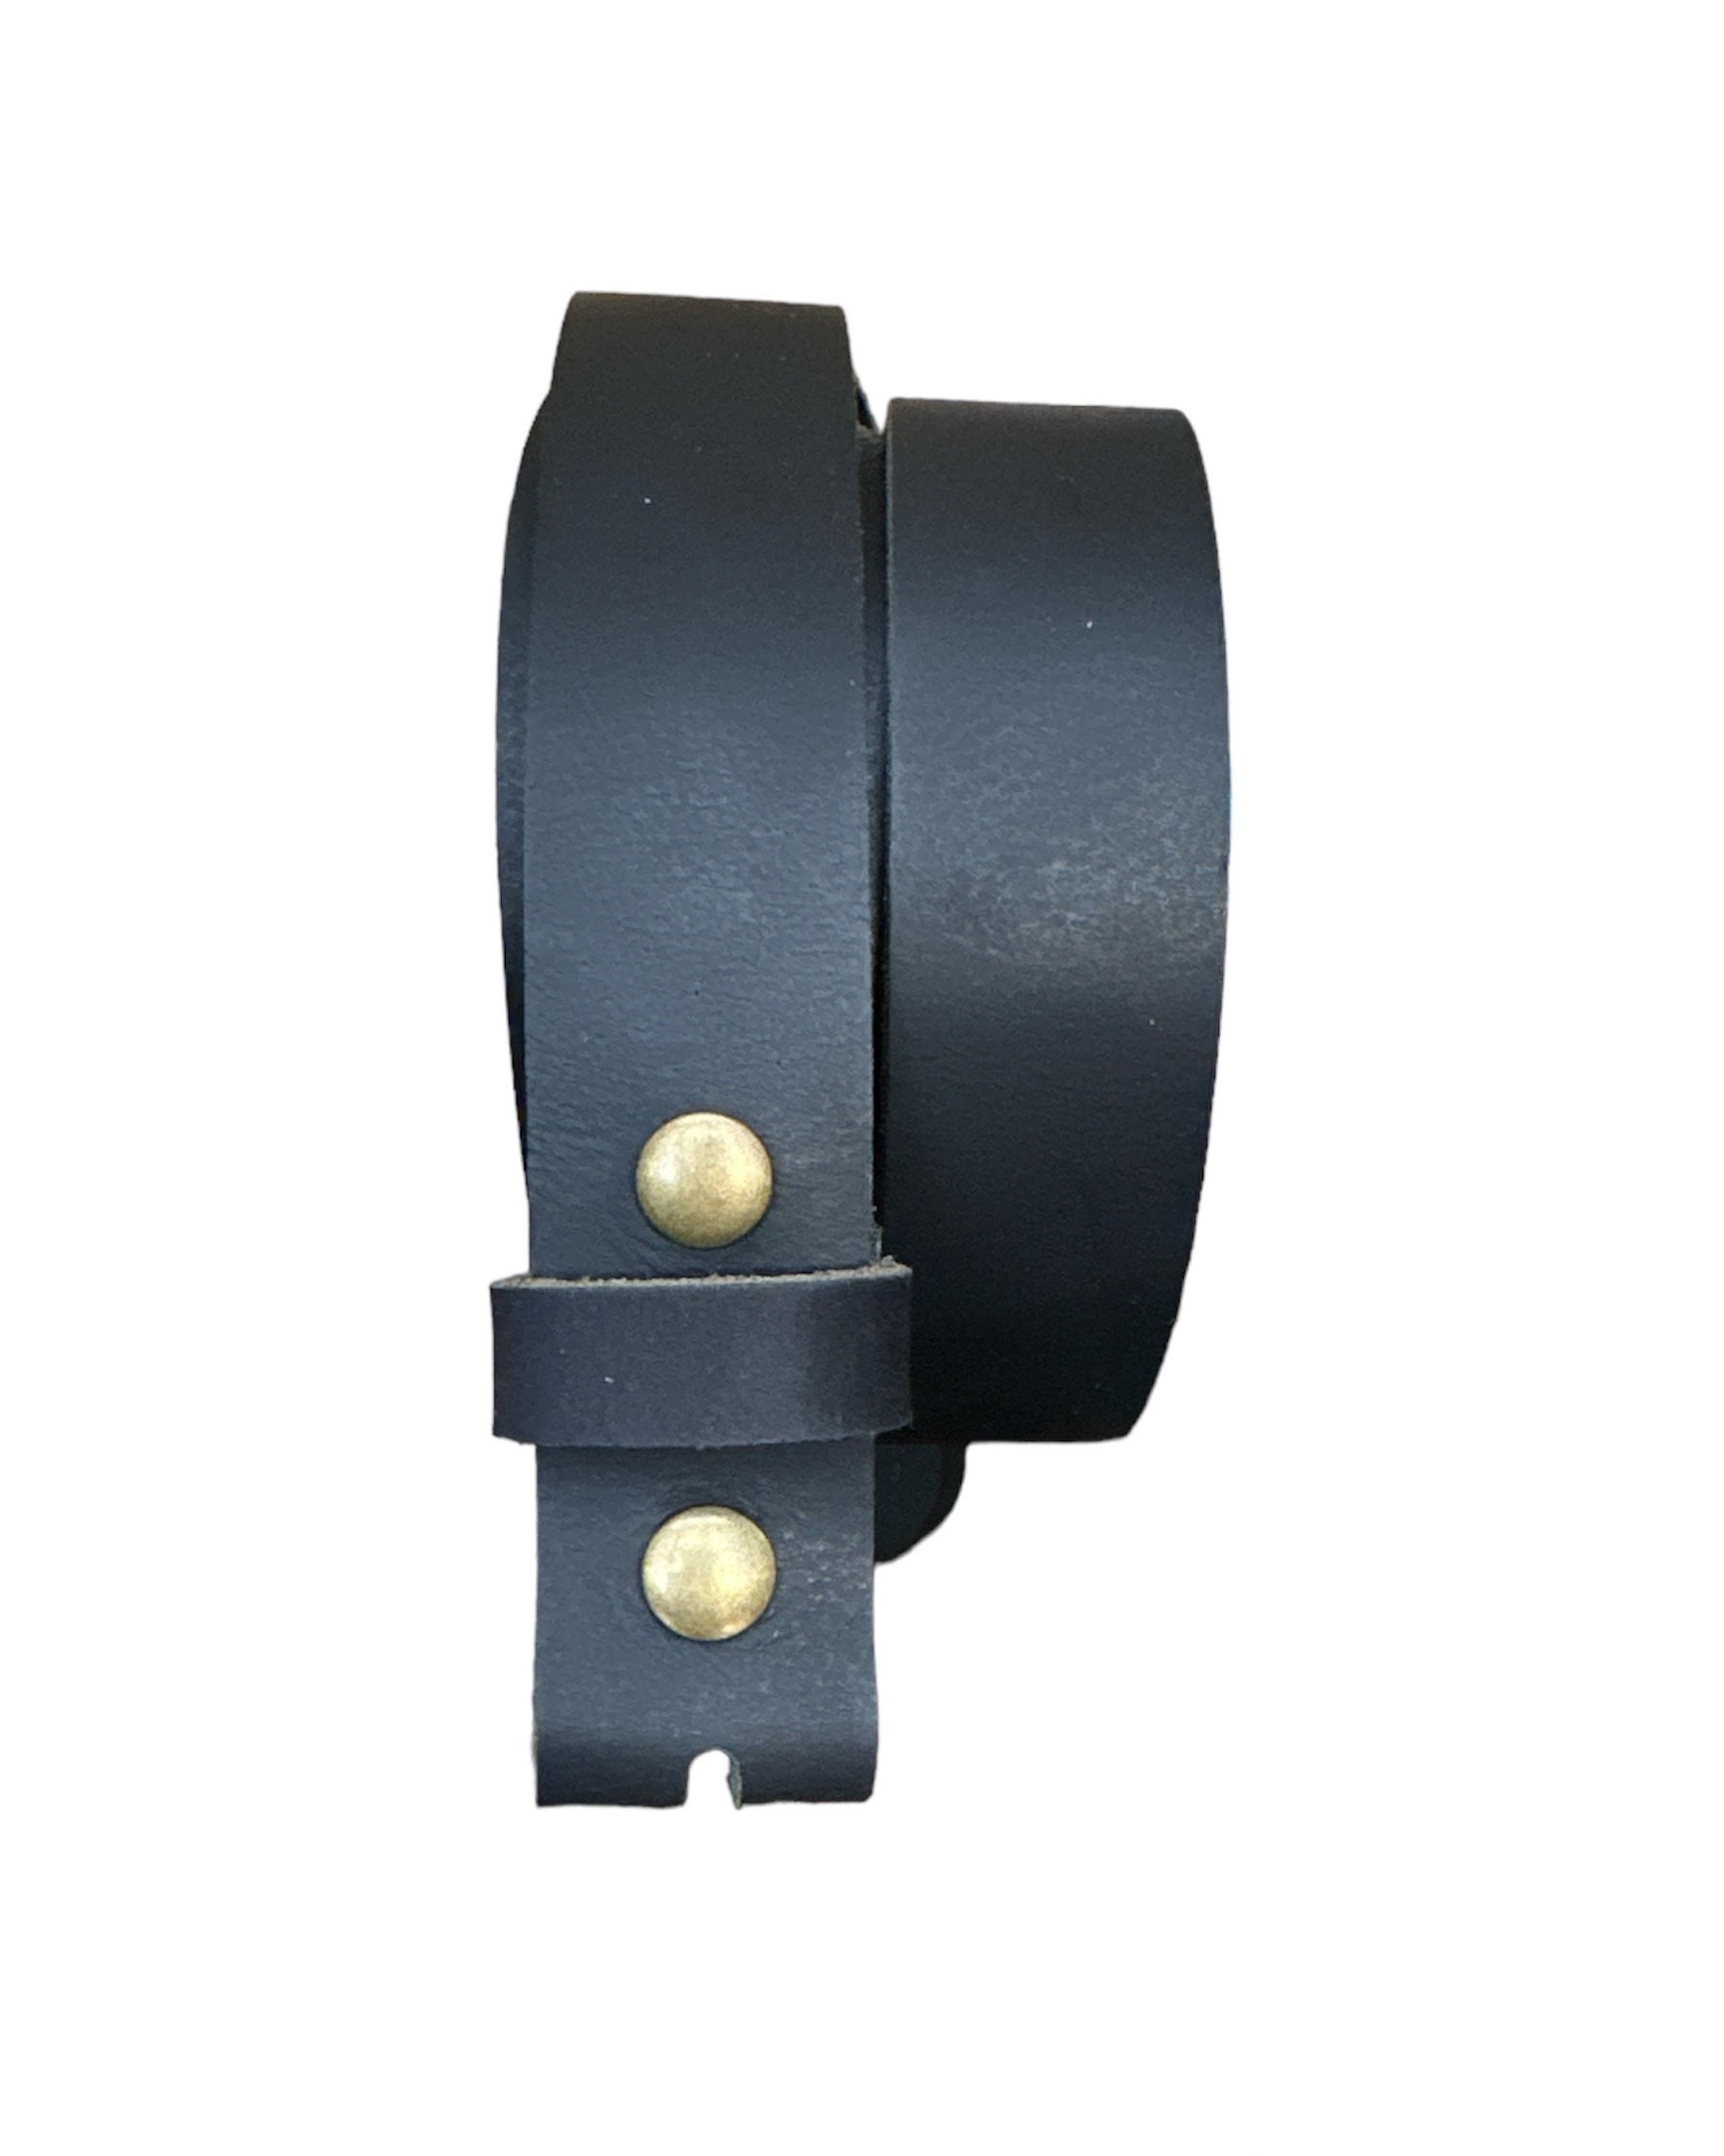 Women's Belt, Wide Belt Vintage Girdle Belt, Fashion V Gold Buckle  Double-sided Leather Belts for Dress 2.8'' Wideth (100CM) at  Women's  Clothing store